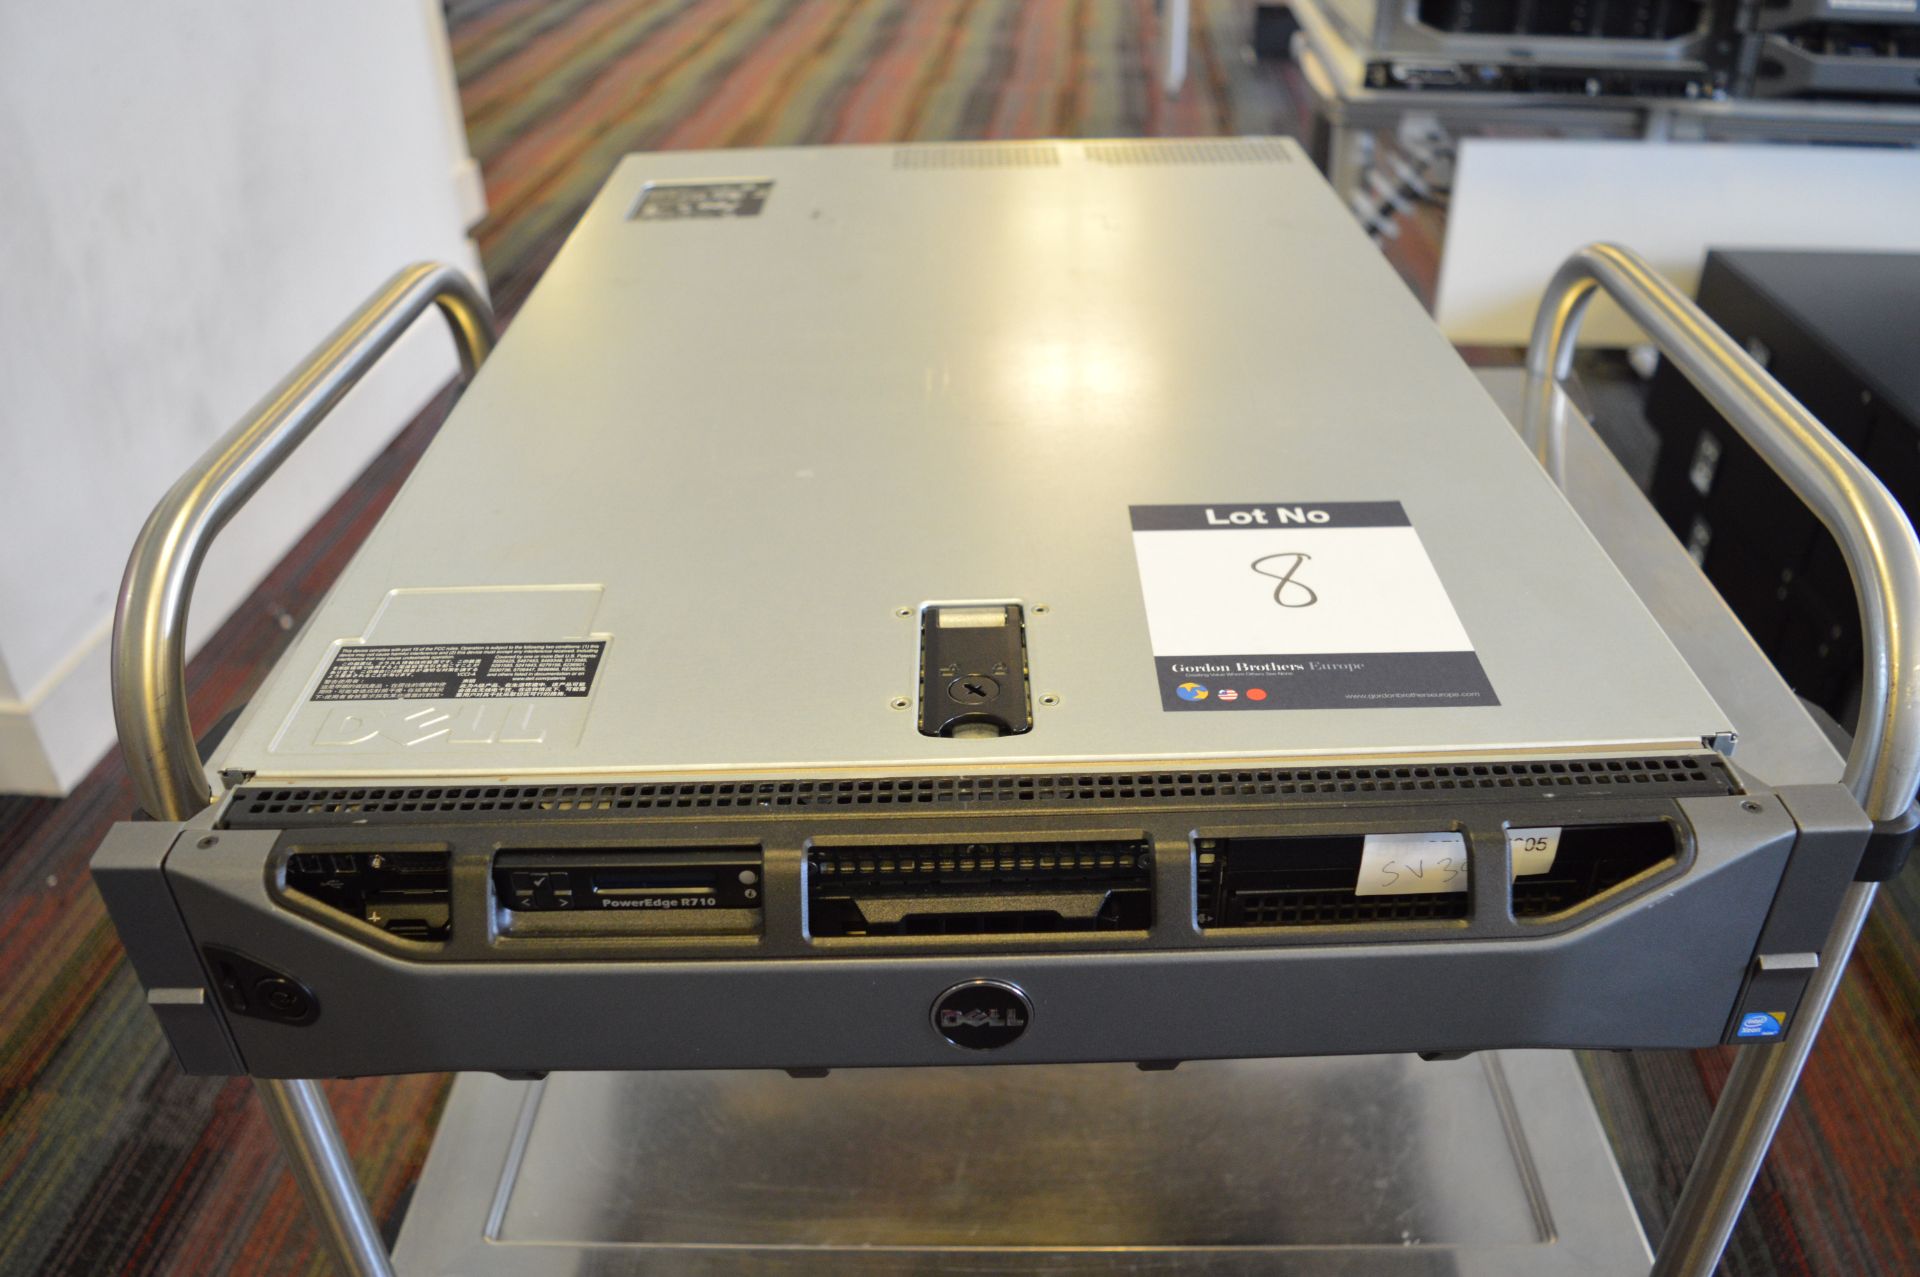 Dell Poweredge R710 X2 146GB SAS Quad Core Xeon 5570, 96GB